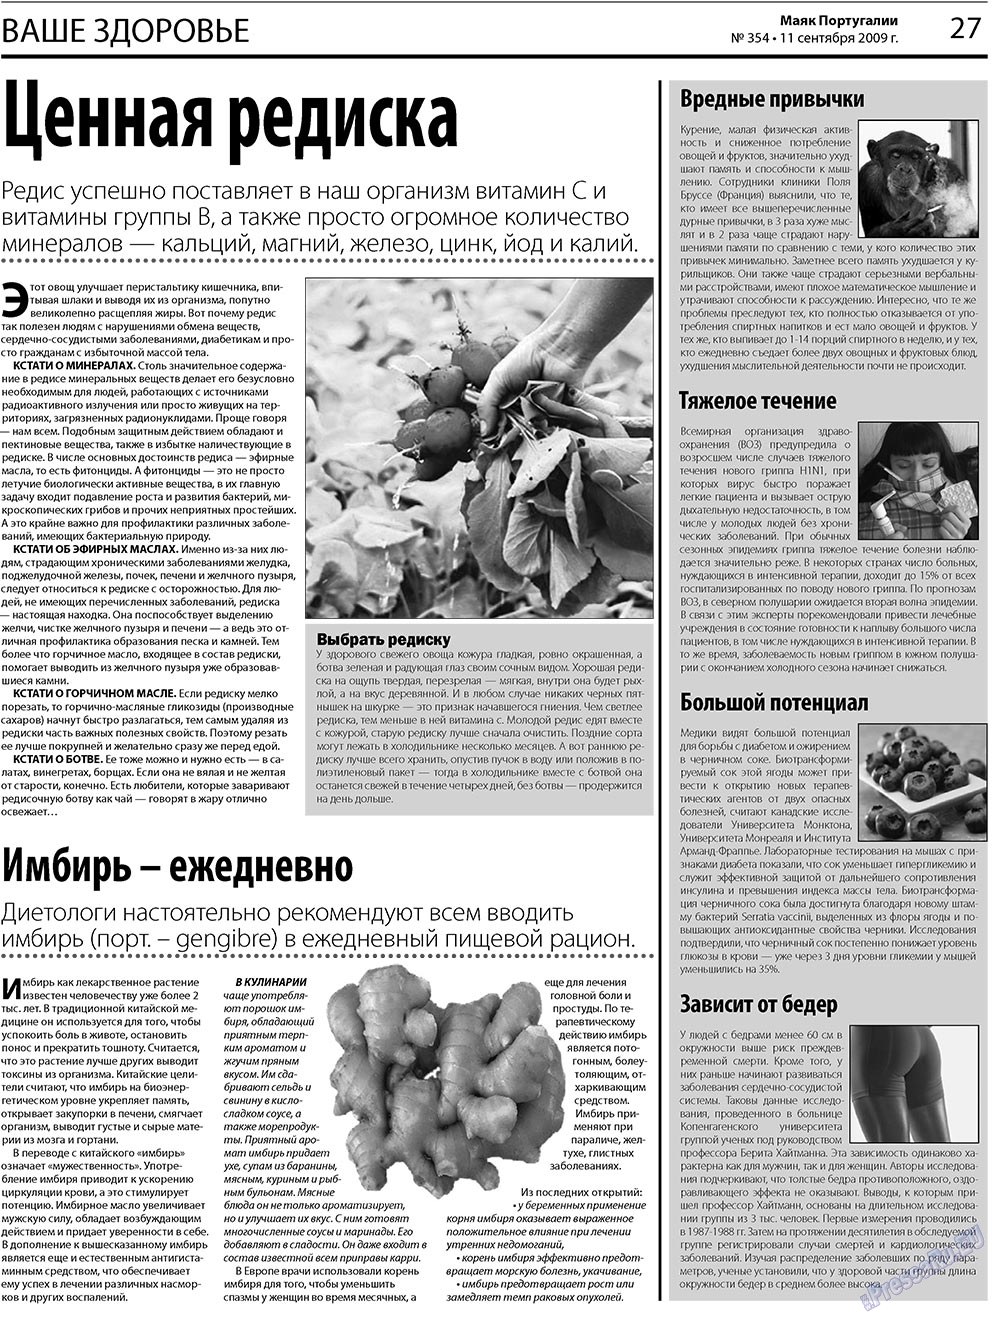 Маяк Португалии, газета. 2009 №38 стр.27